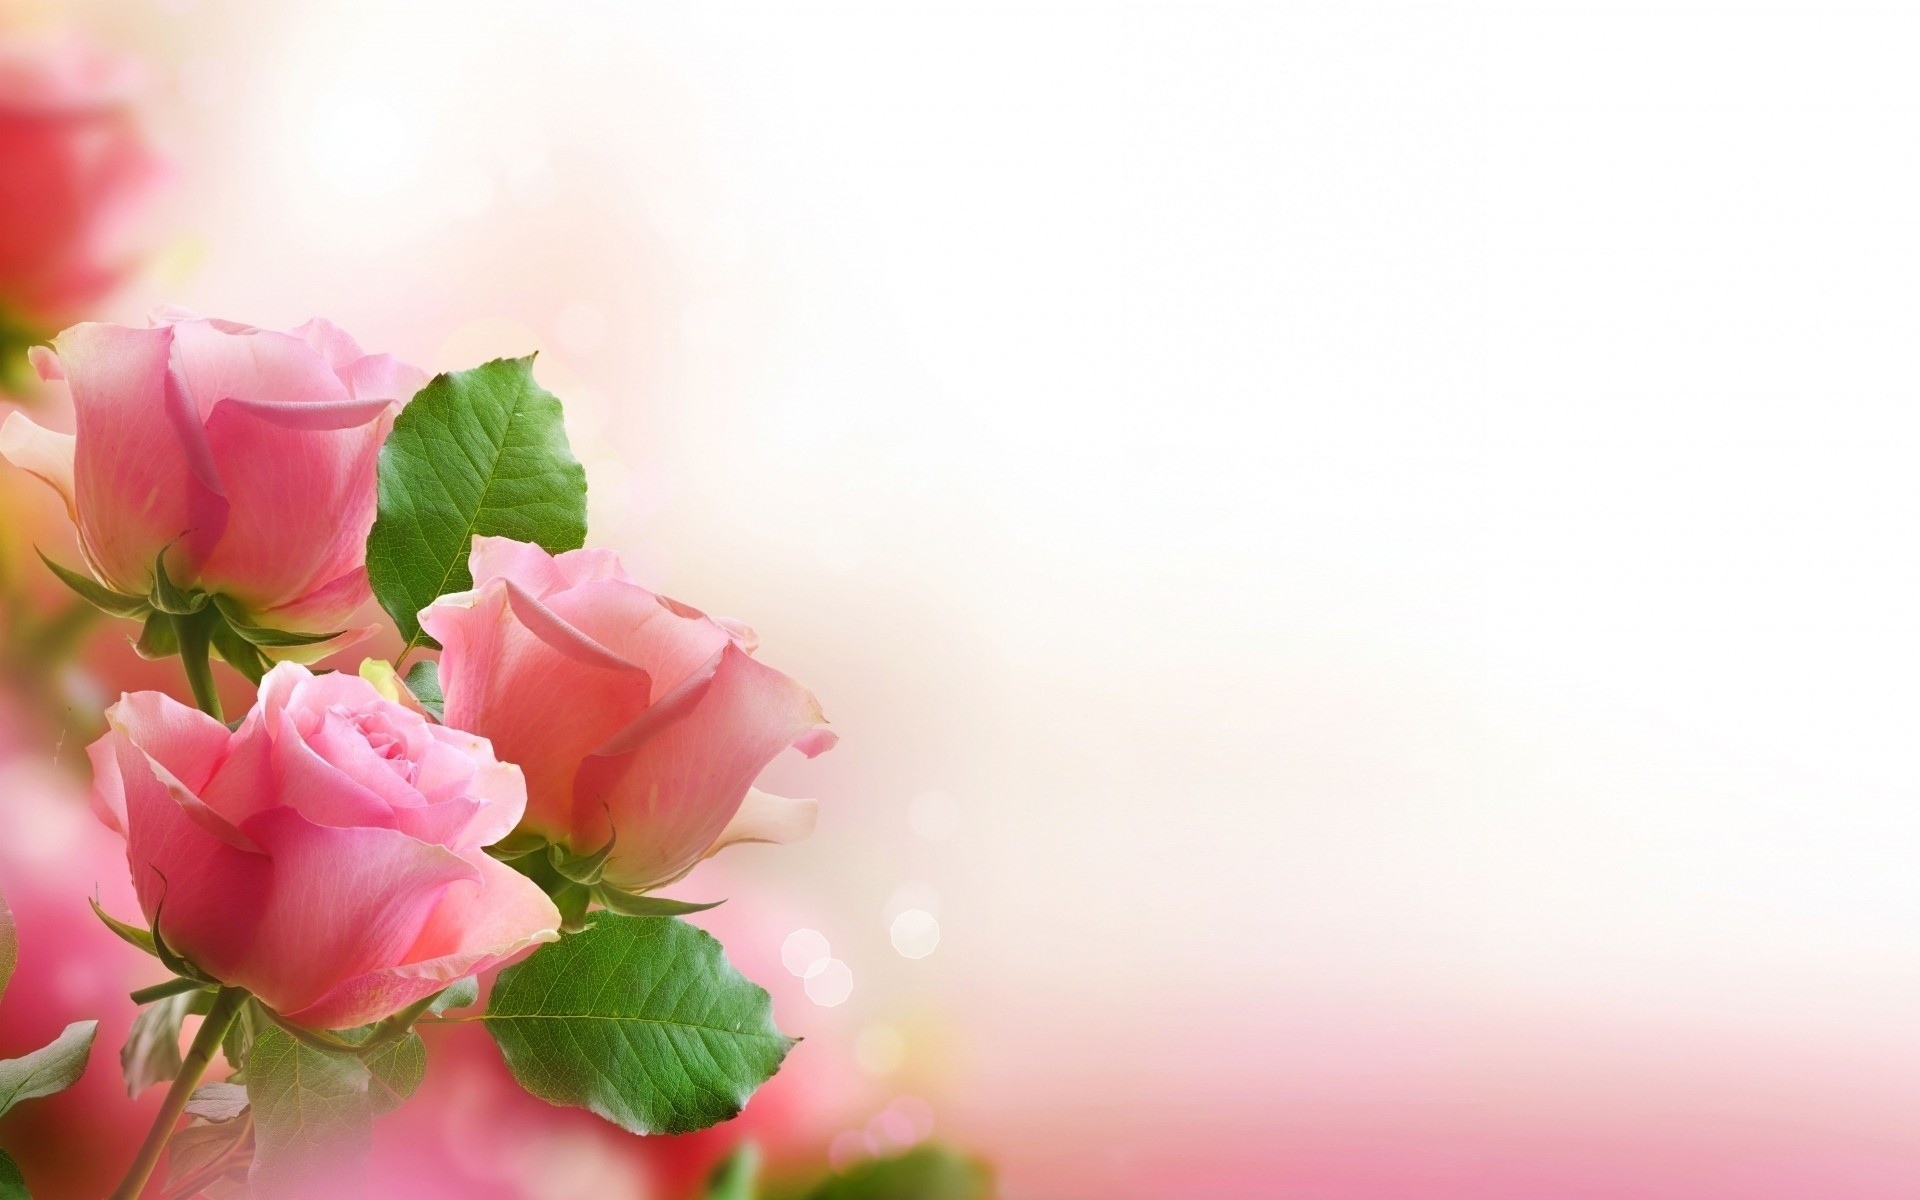 Nature Flowers Art Roses Love Romance Pink Leaves Mood Wallpaper